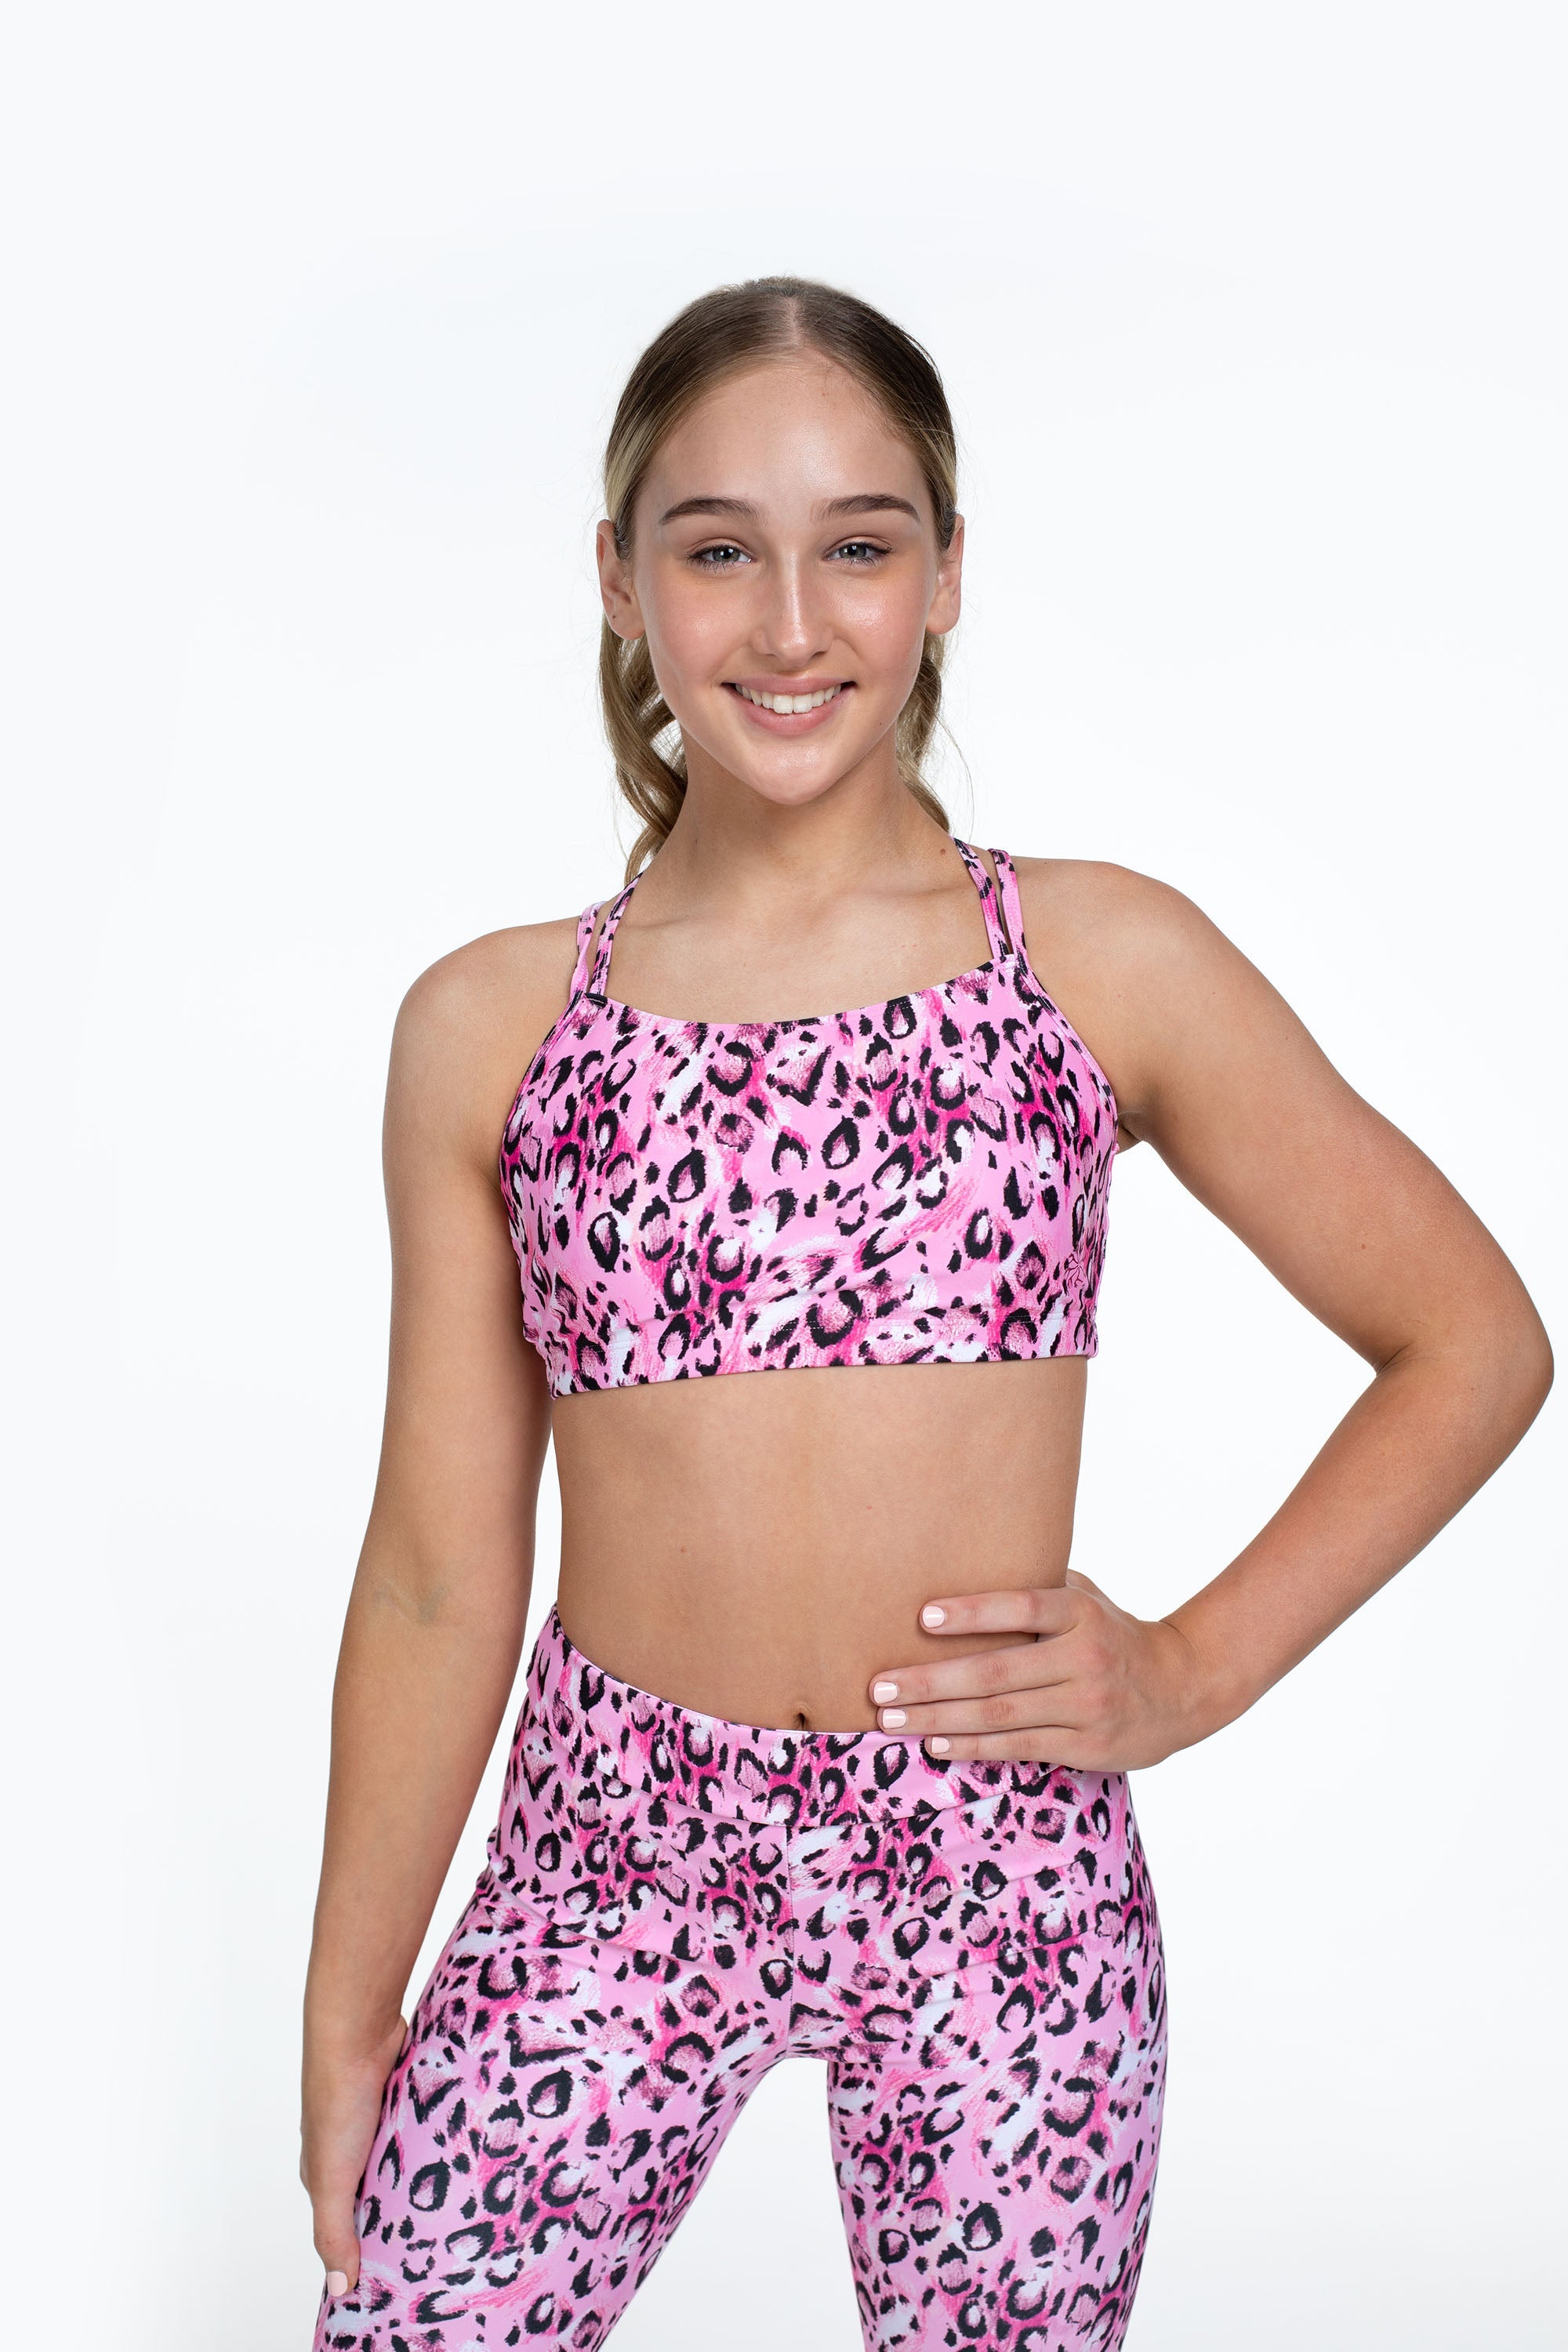 Girls' Pink Sports Bra for Teens and Tweens, Girls Activewear